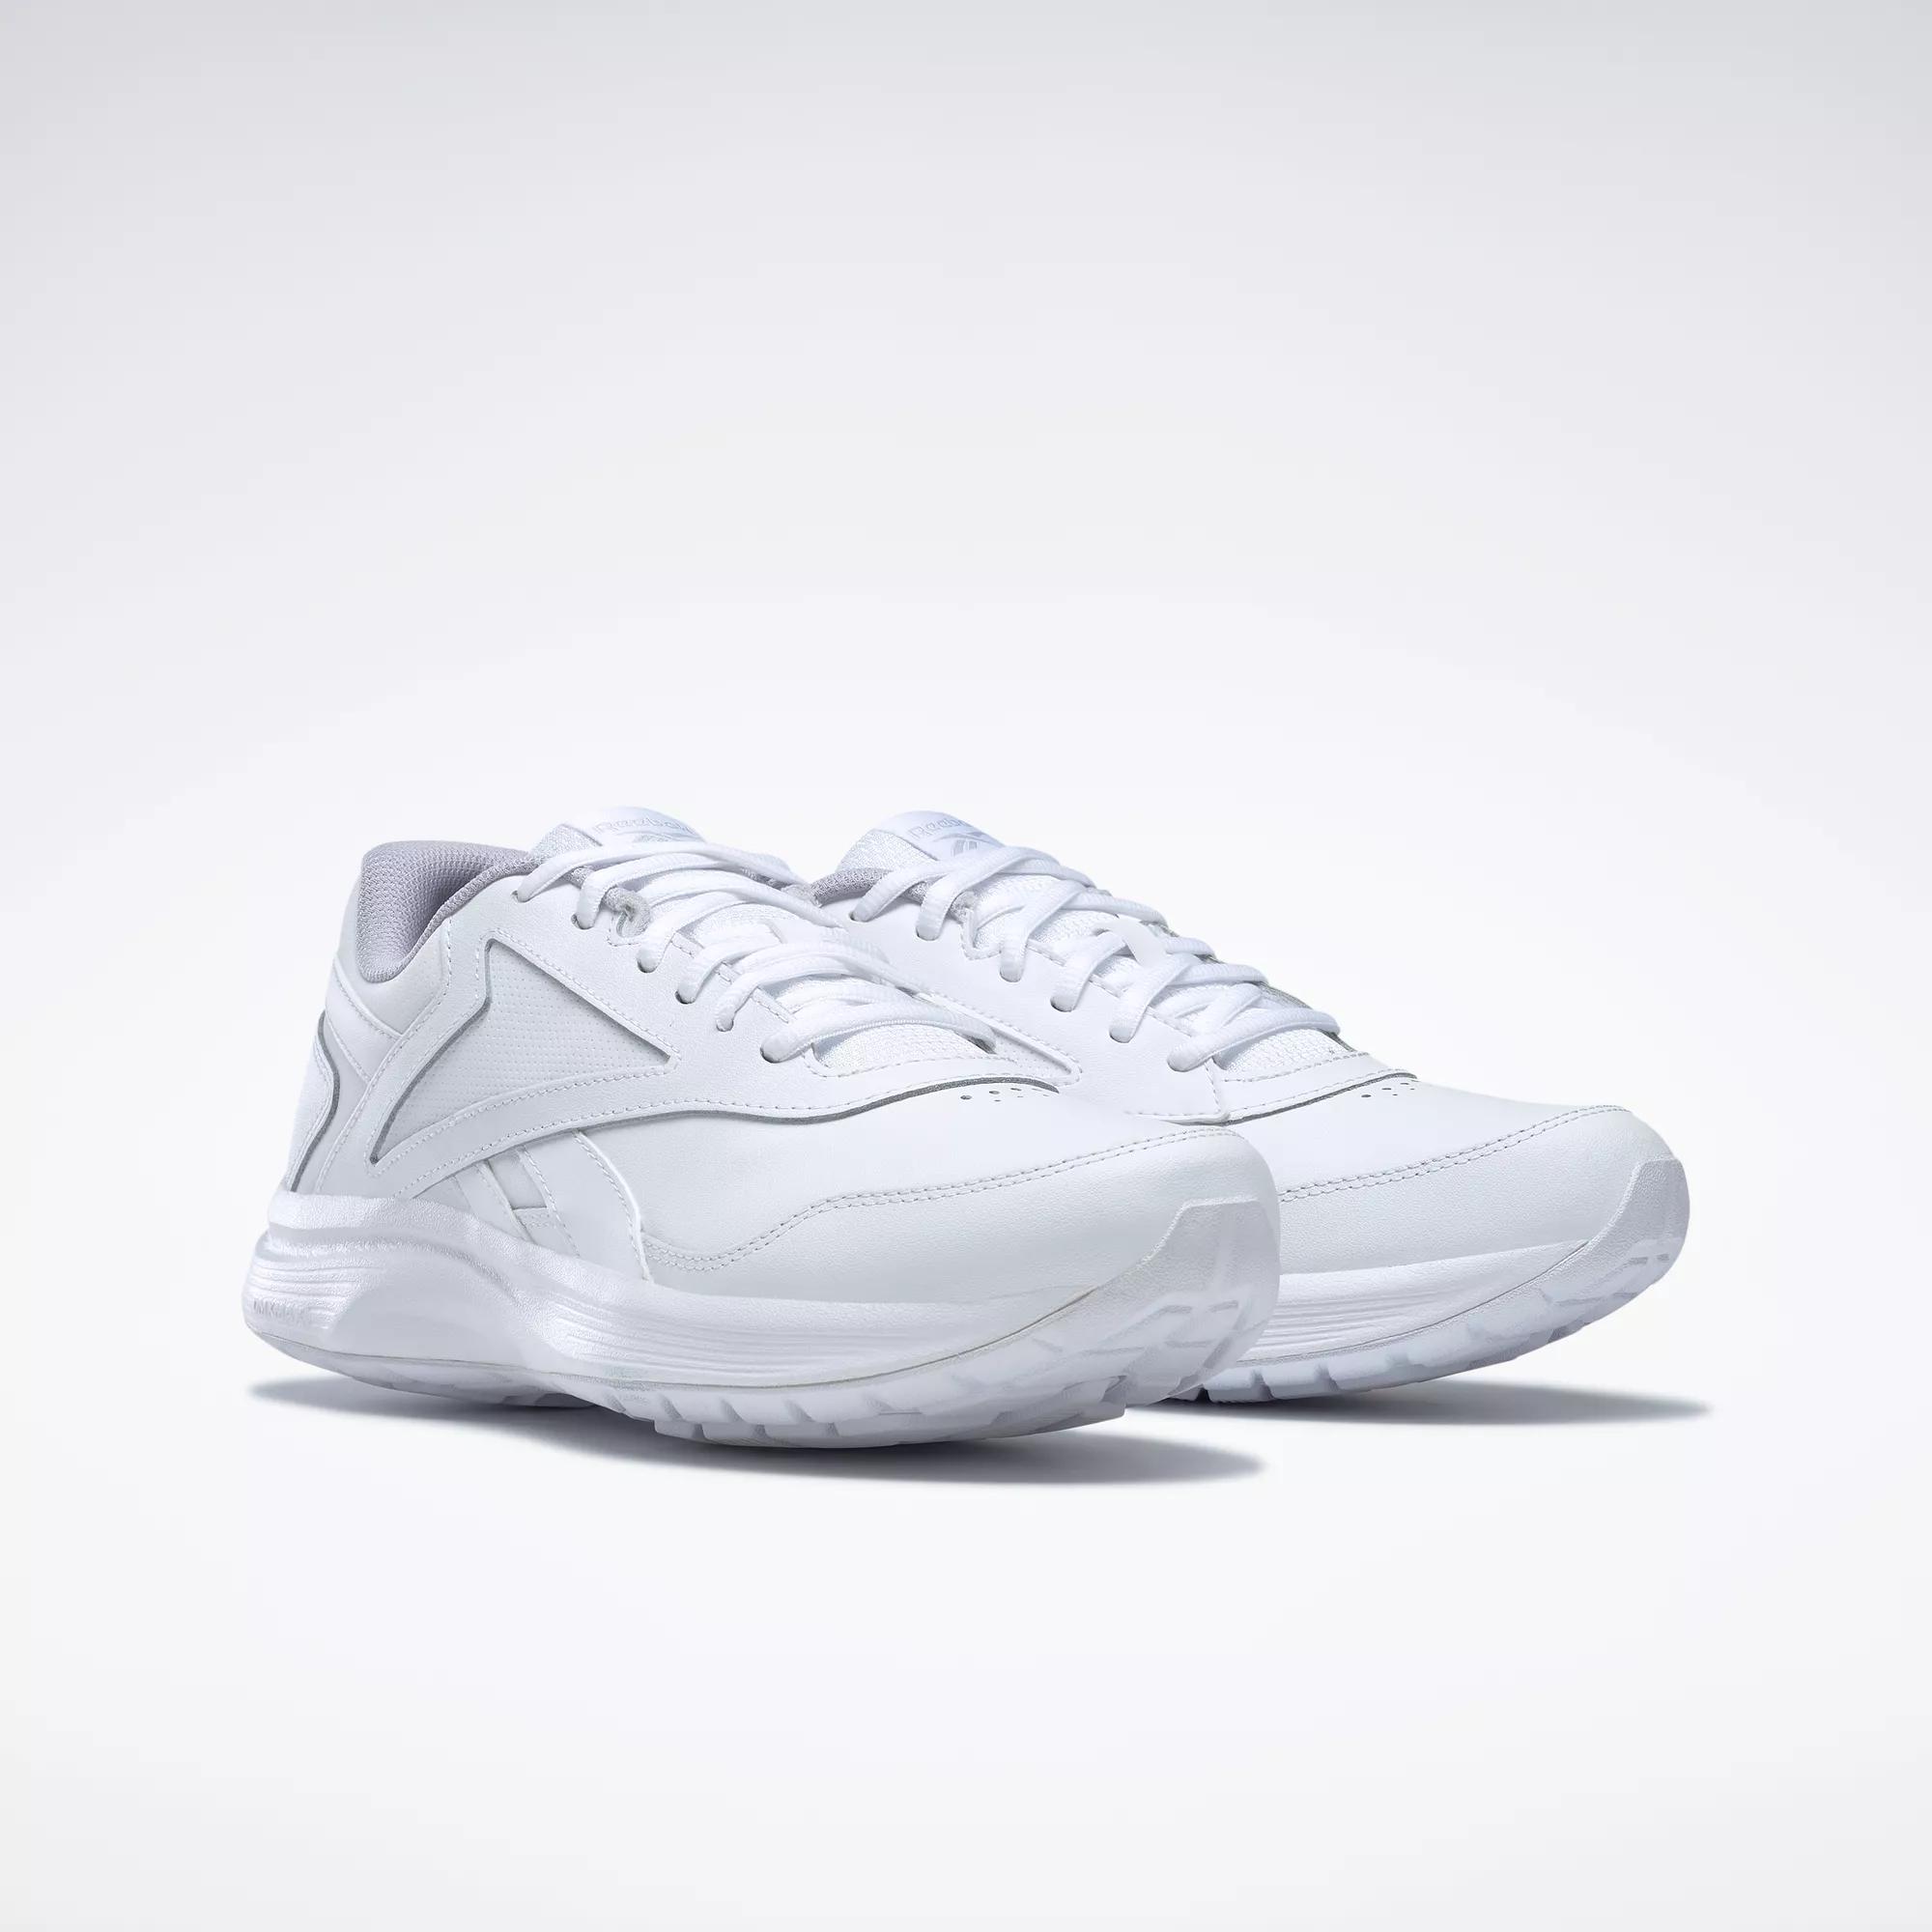 Walk Ultra 7 DMX MAX Men's Shoes - White / Cold Grey 2 / White |